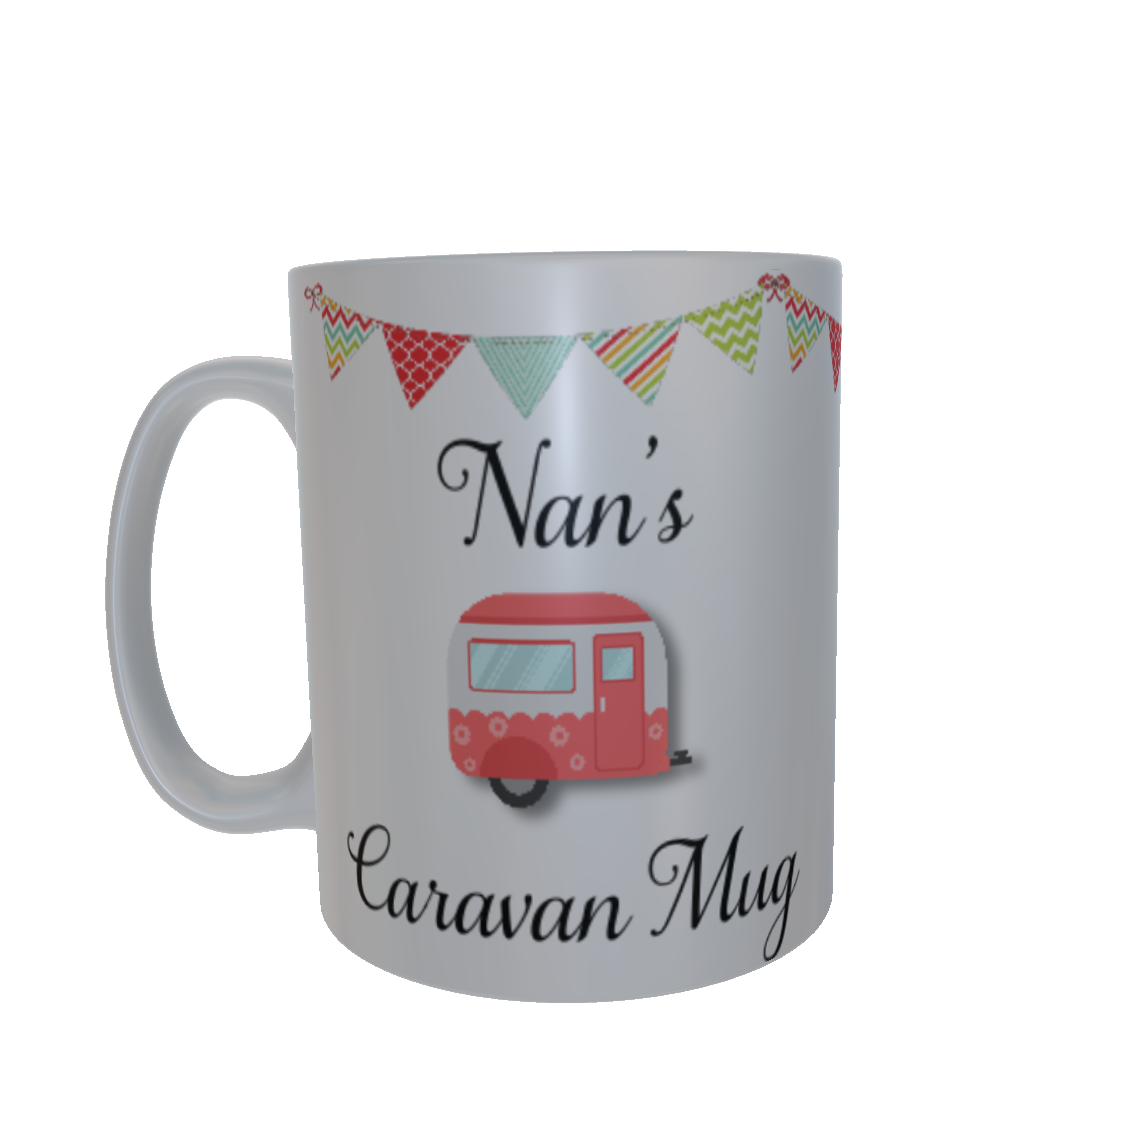 Grandmother Caravan Mug - Porcelain 11oz.